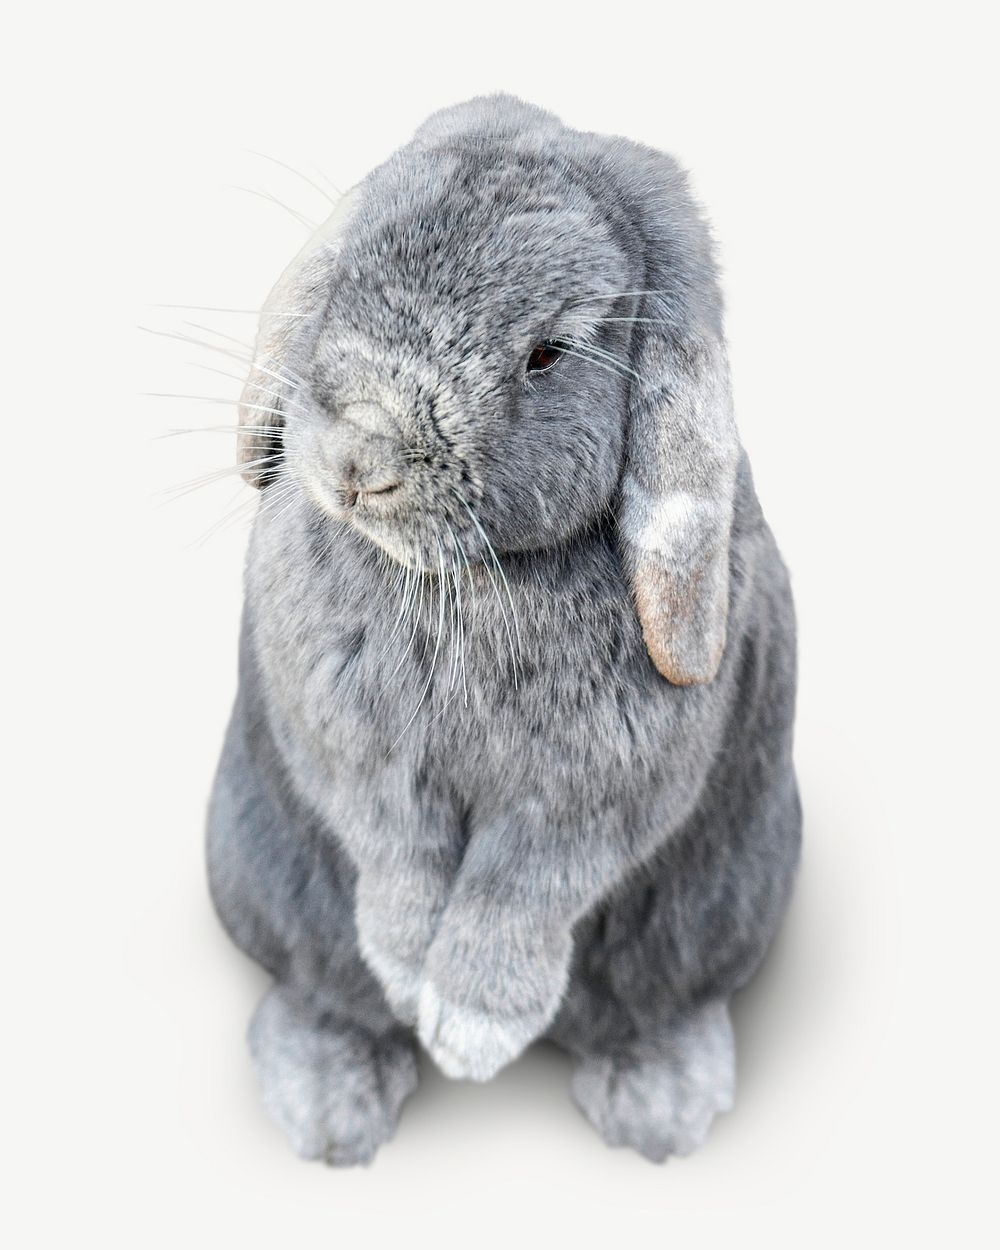 Holland Lop rabbit, cute bunny psd